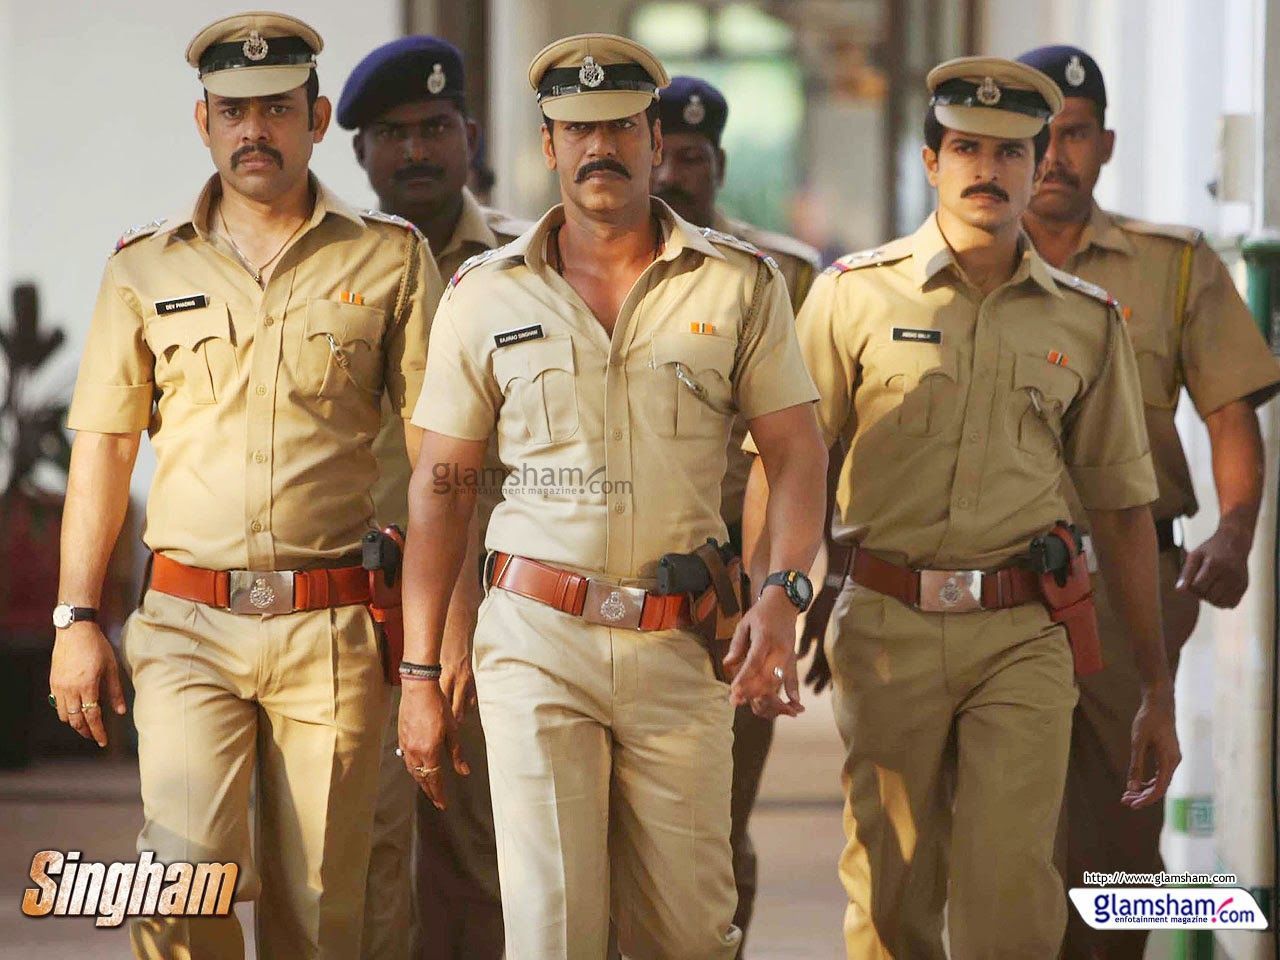 Daily Uniqe Wallpaper: Free* Singham Movie Wallpaper. Movie wallpaper, Men in uniform, Bollywood action movies